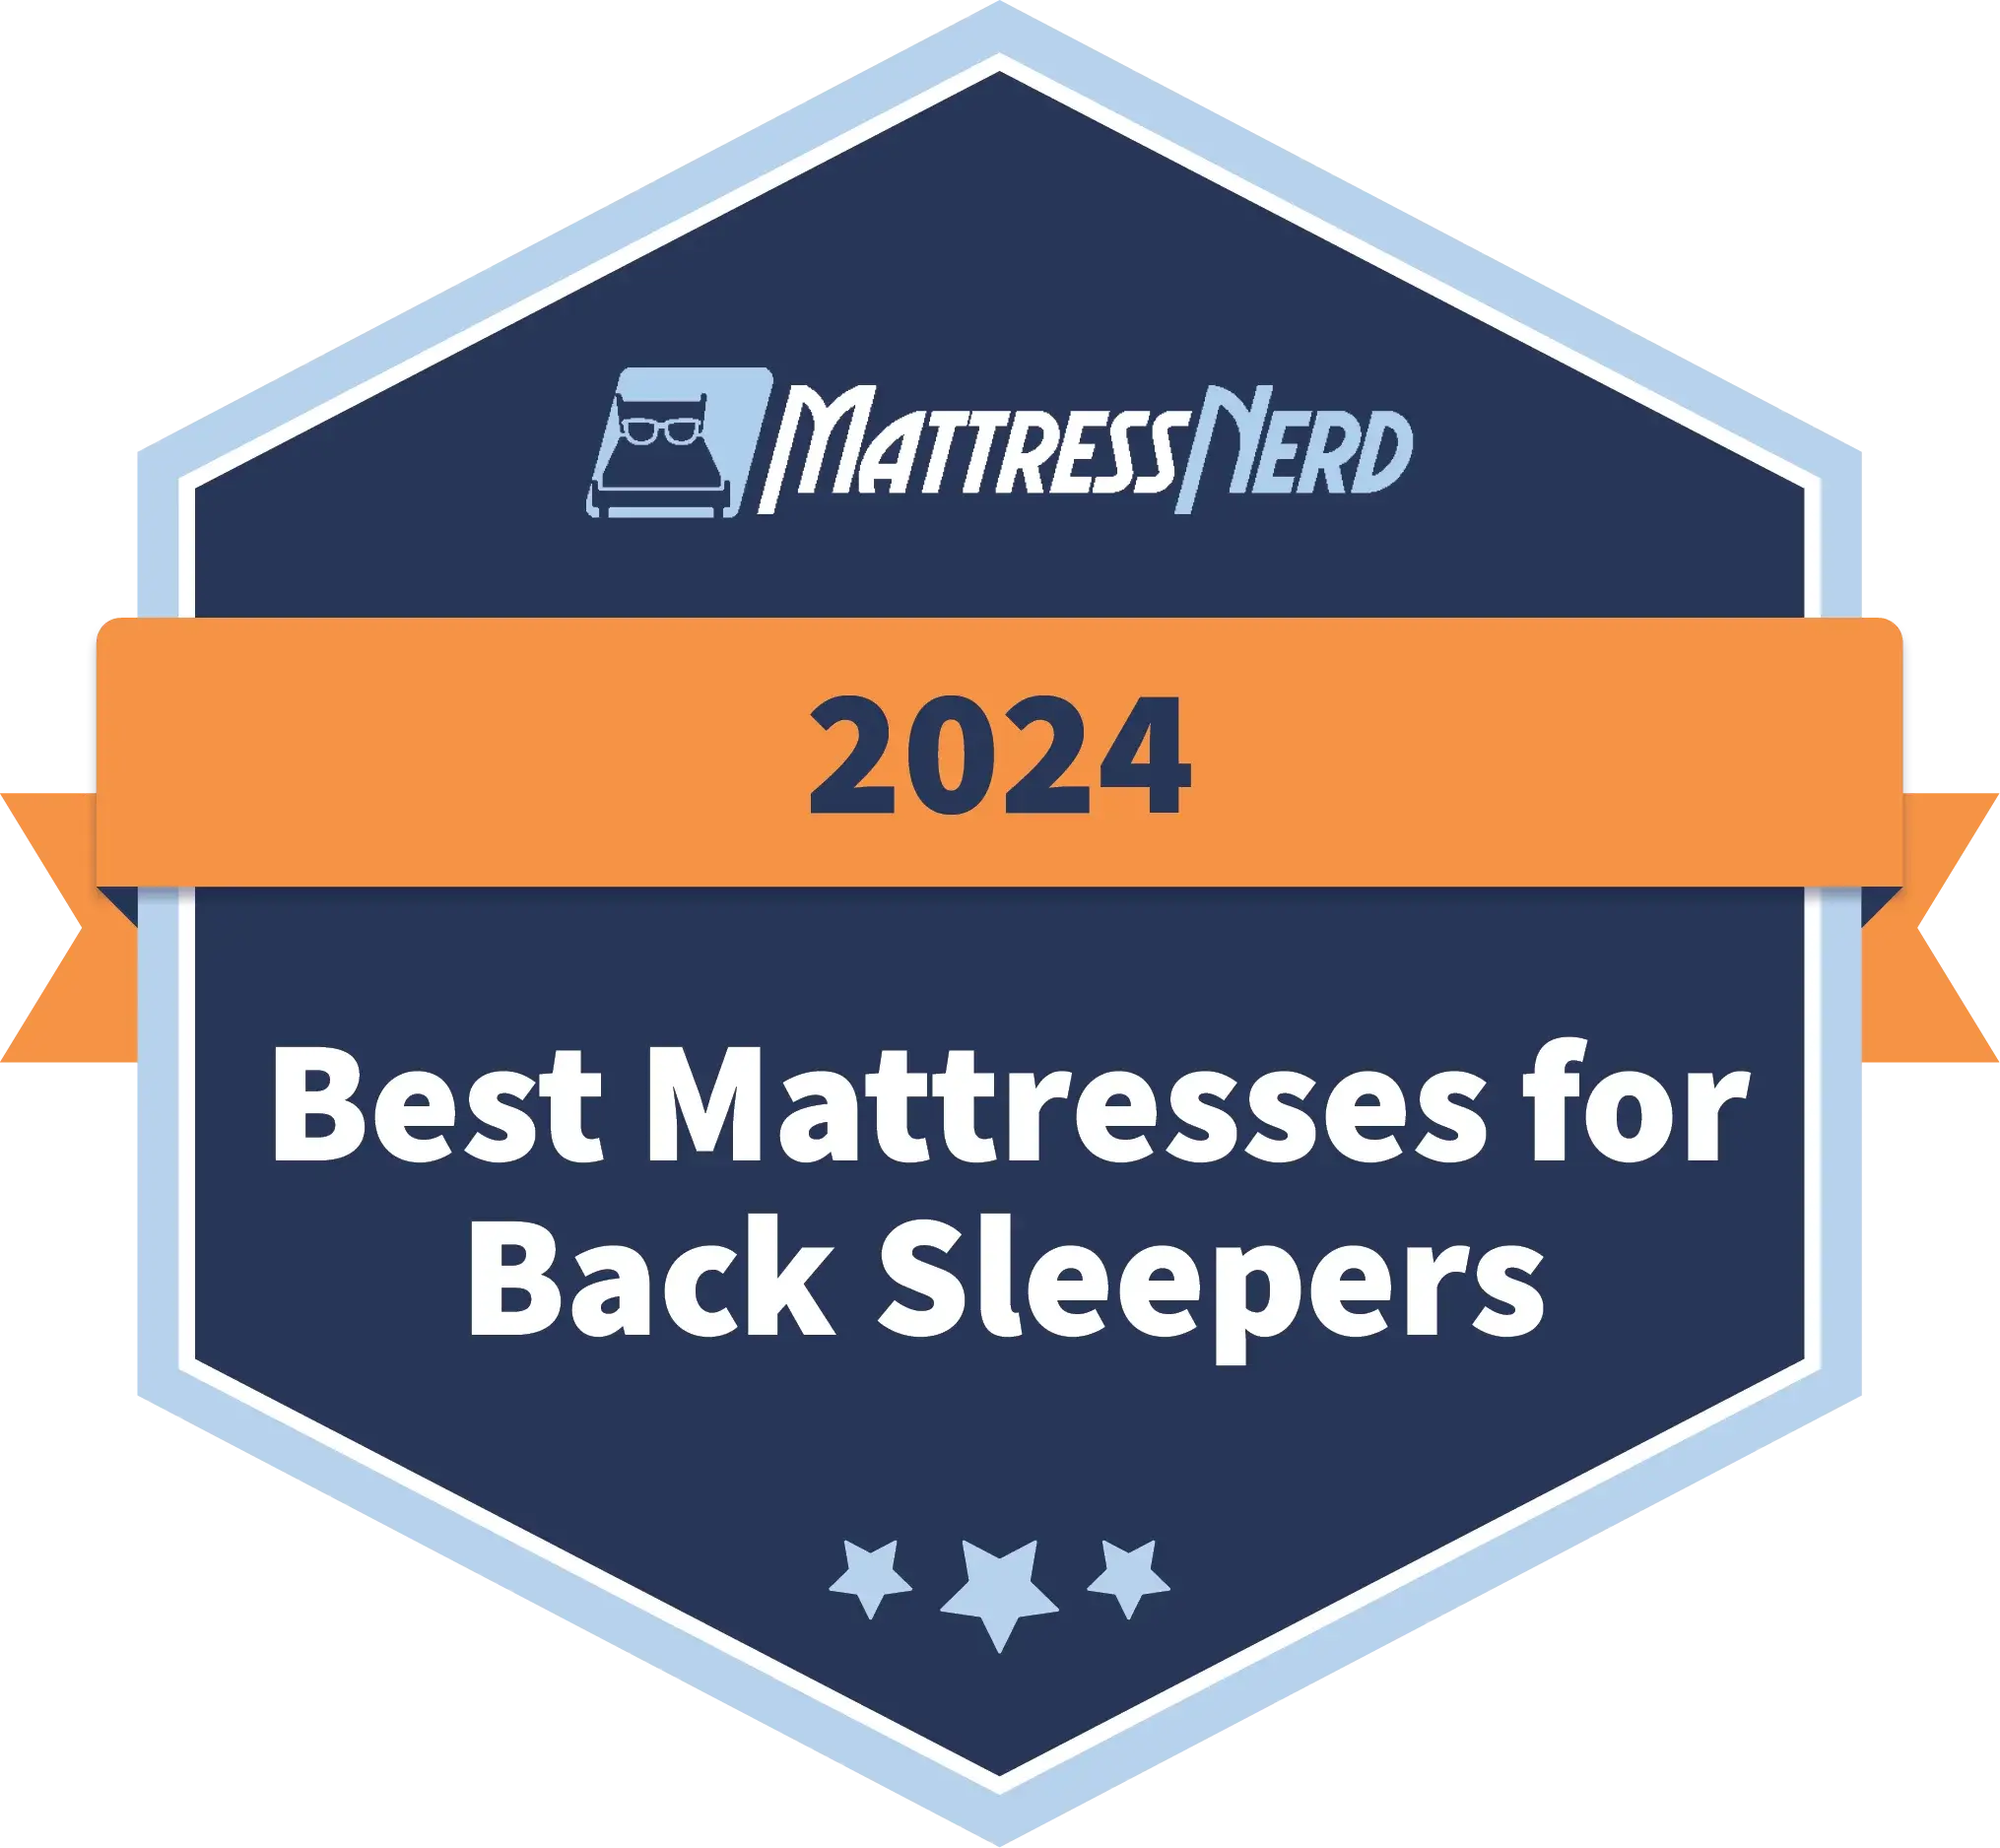 Best Mattress For Side Sleepers